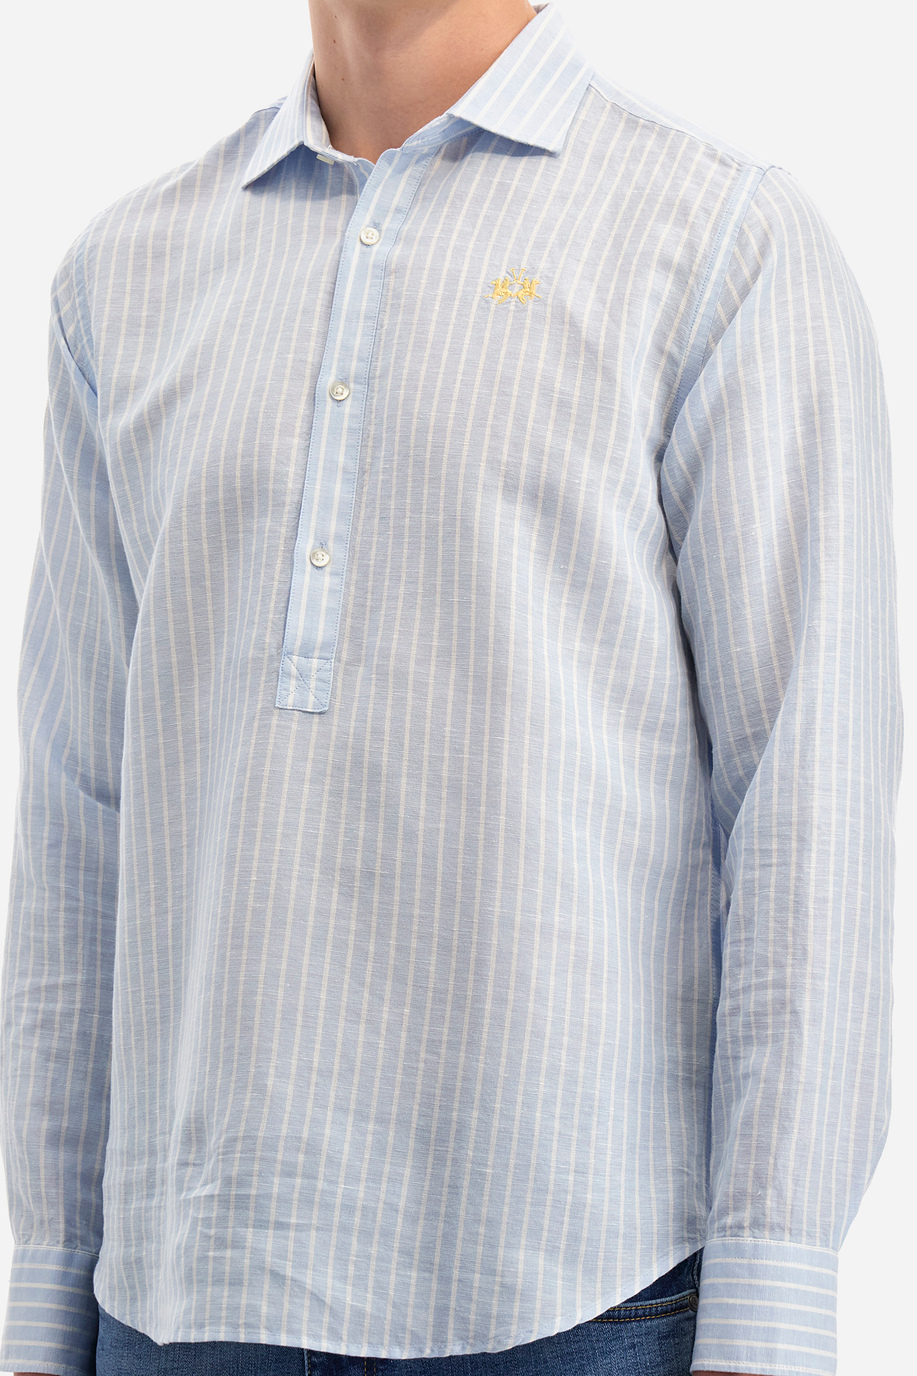 Hemd aus Baumwolle gestreift - Innocent - Hemden | La Martina - Official Online Shop